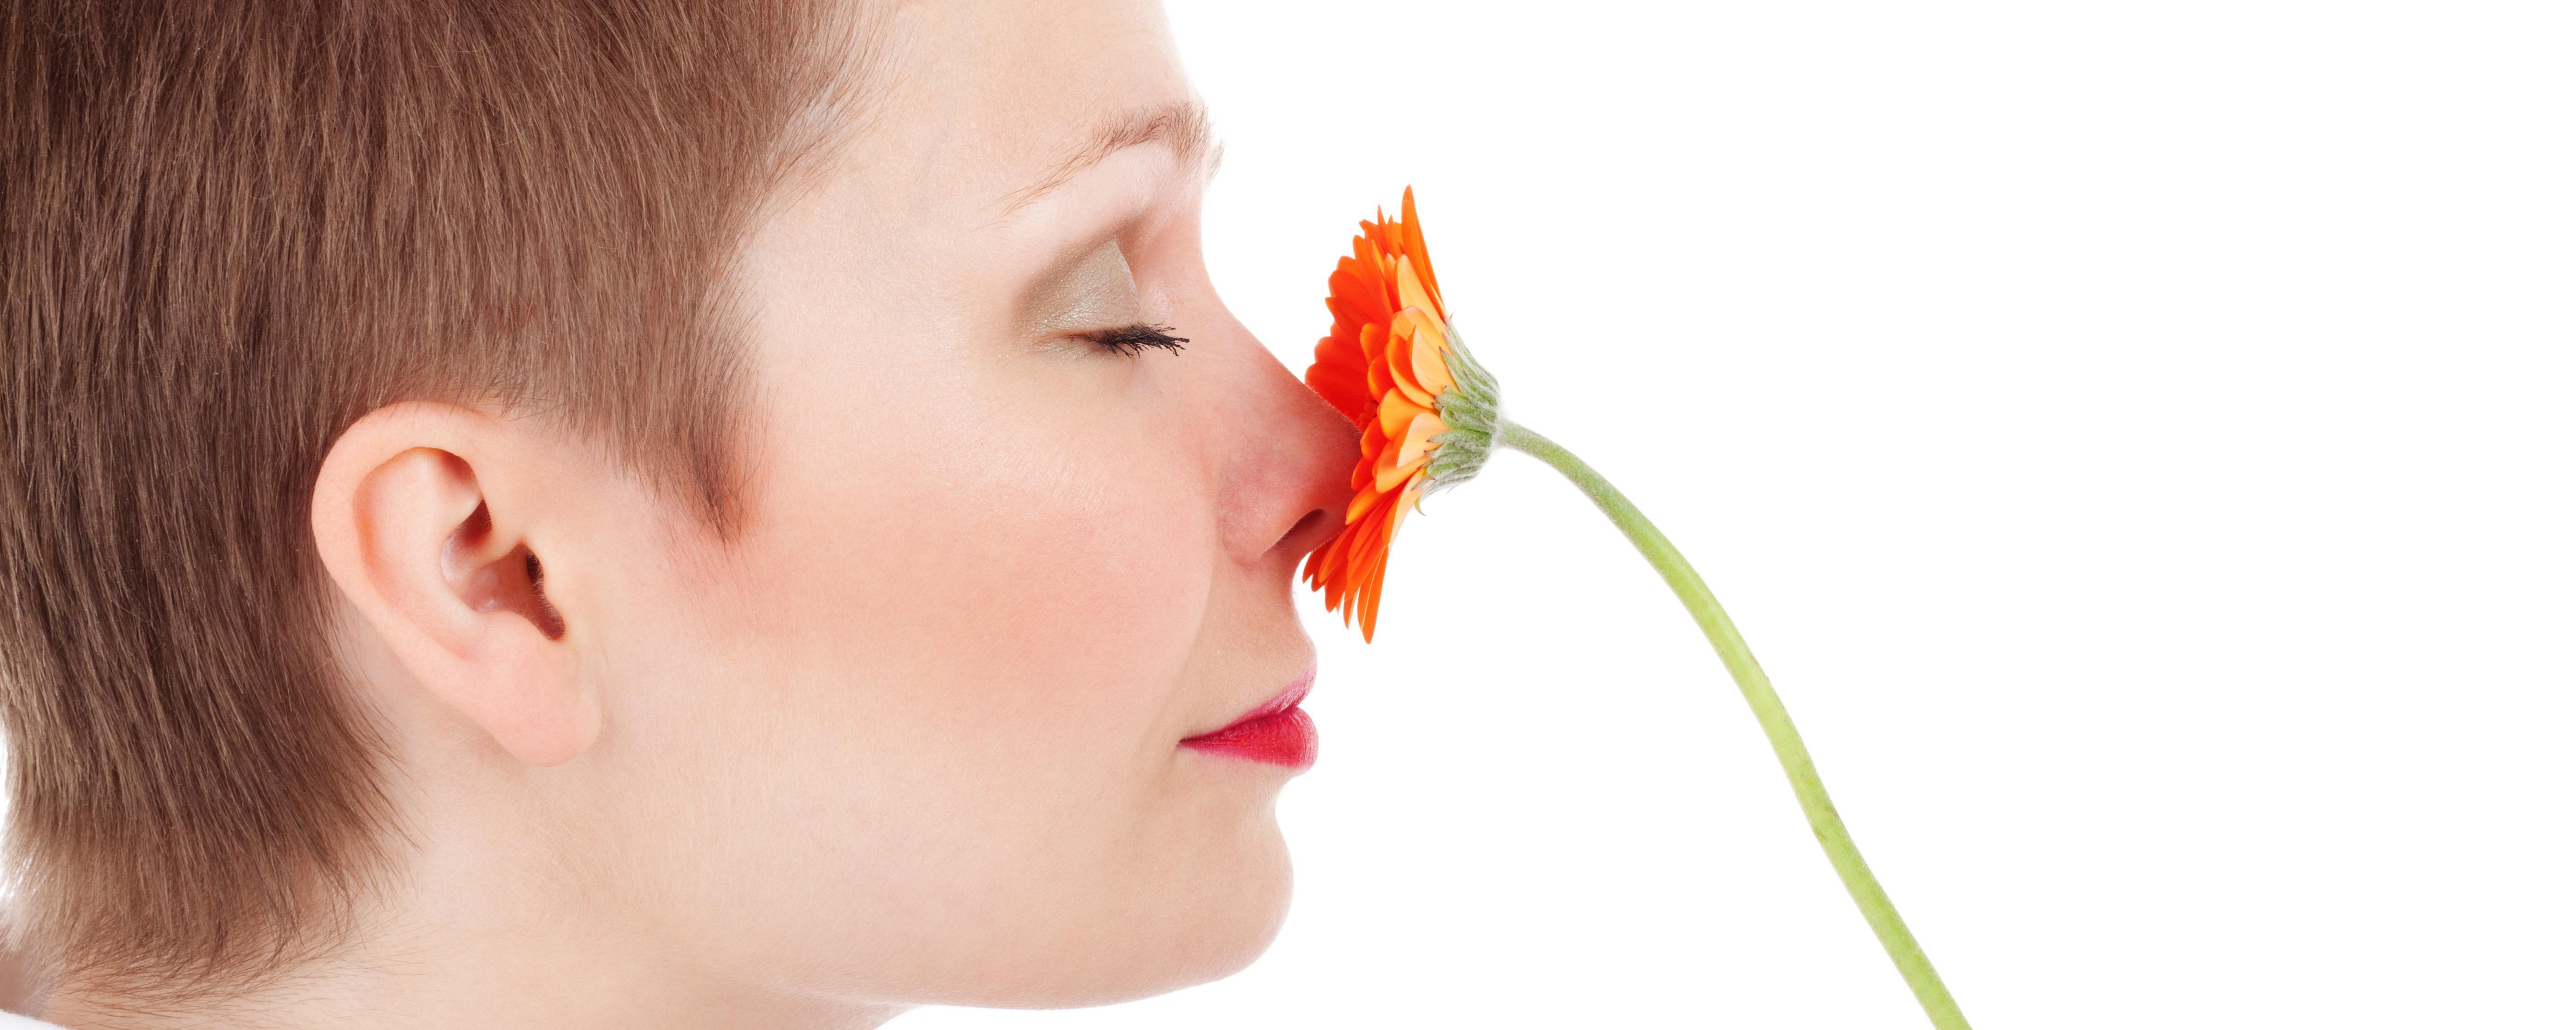 Frau riecht an einer Blume